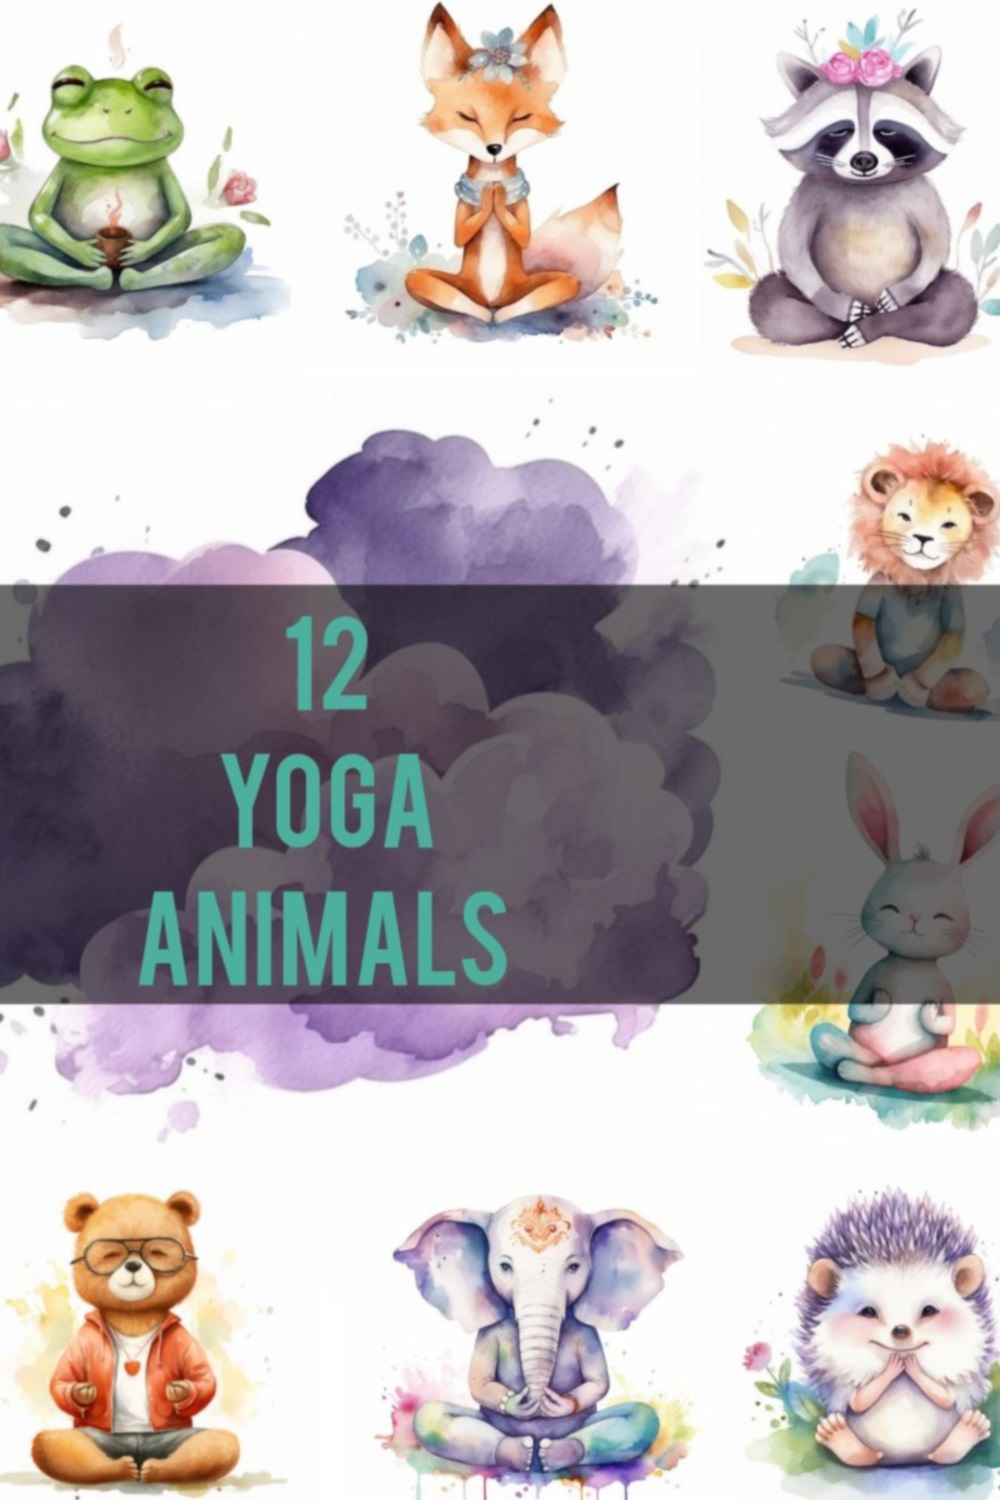 12 Watercolor Yoga Animals| Giraffe, frog, fox, lama, sloth, bear, hedgehog, bunny, lion, unicorn, elephant pinterest preview image.